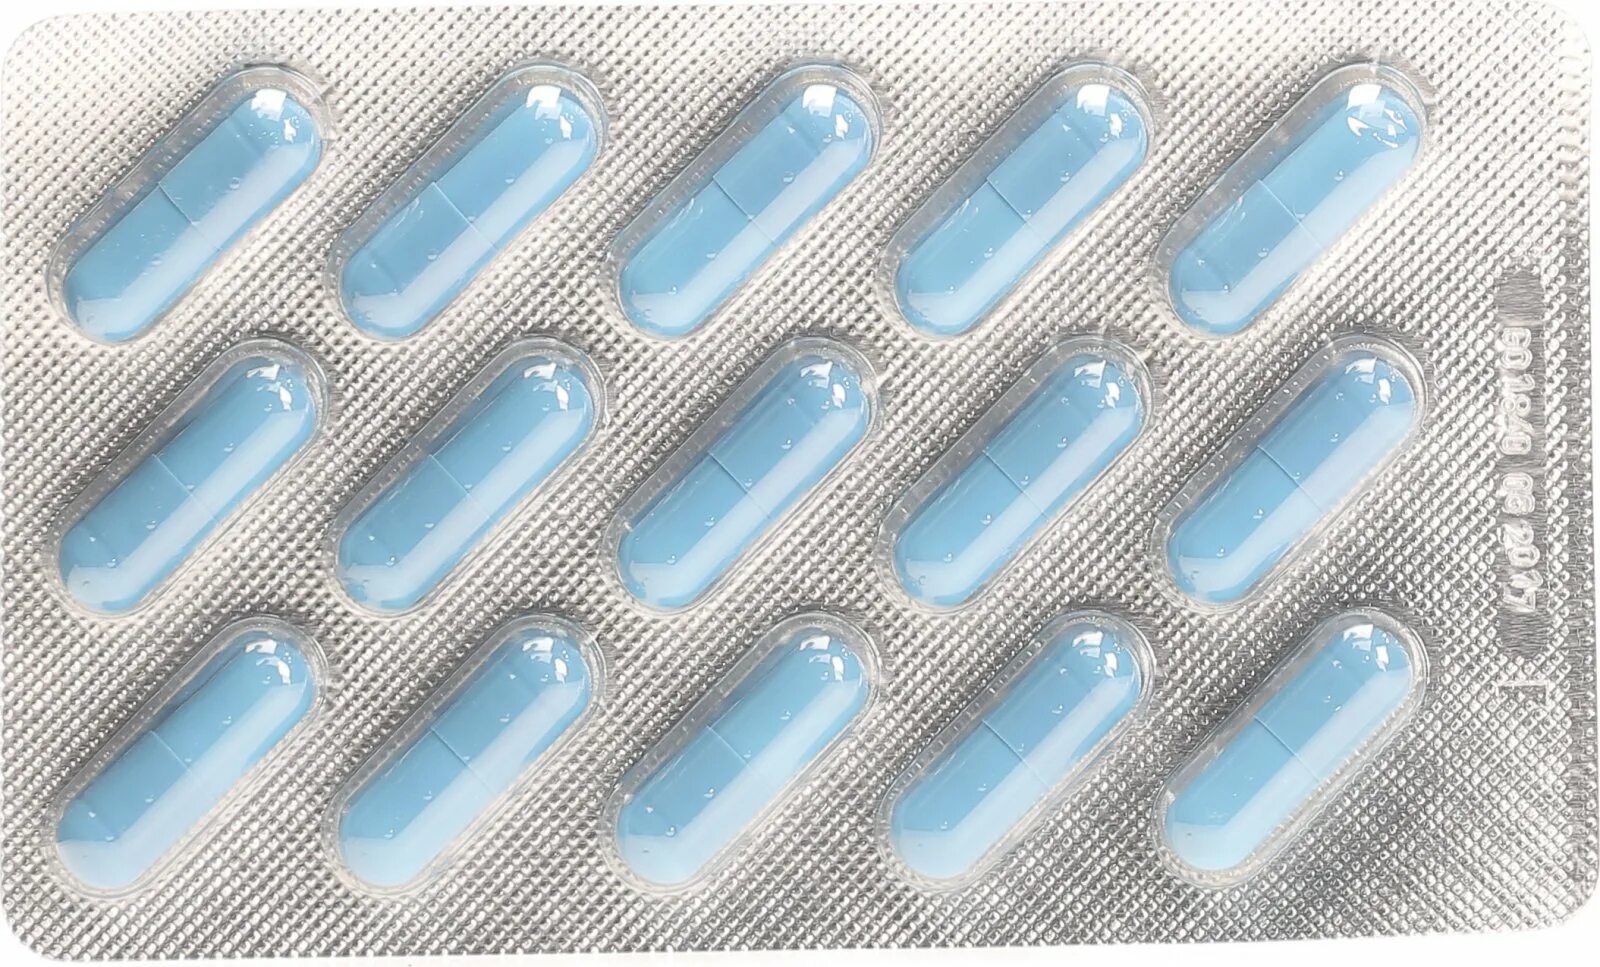 Структум капс 250мг. Синие капсулы. Капсула (лекарственная форма). Капсула 500 мг голубая. Лекарственная форма кальция